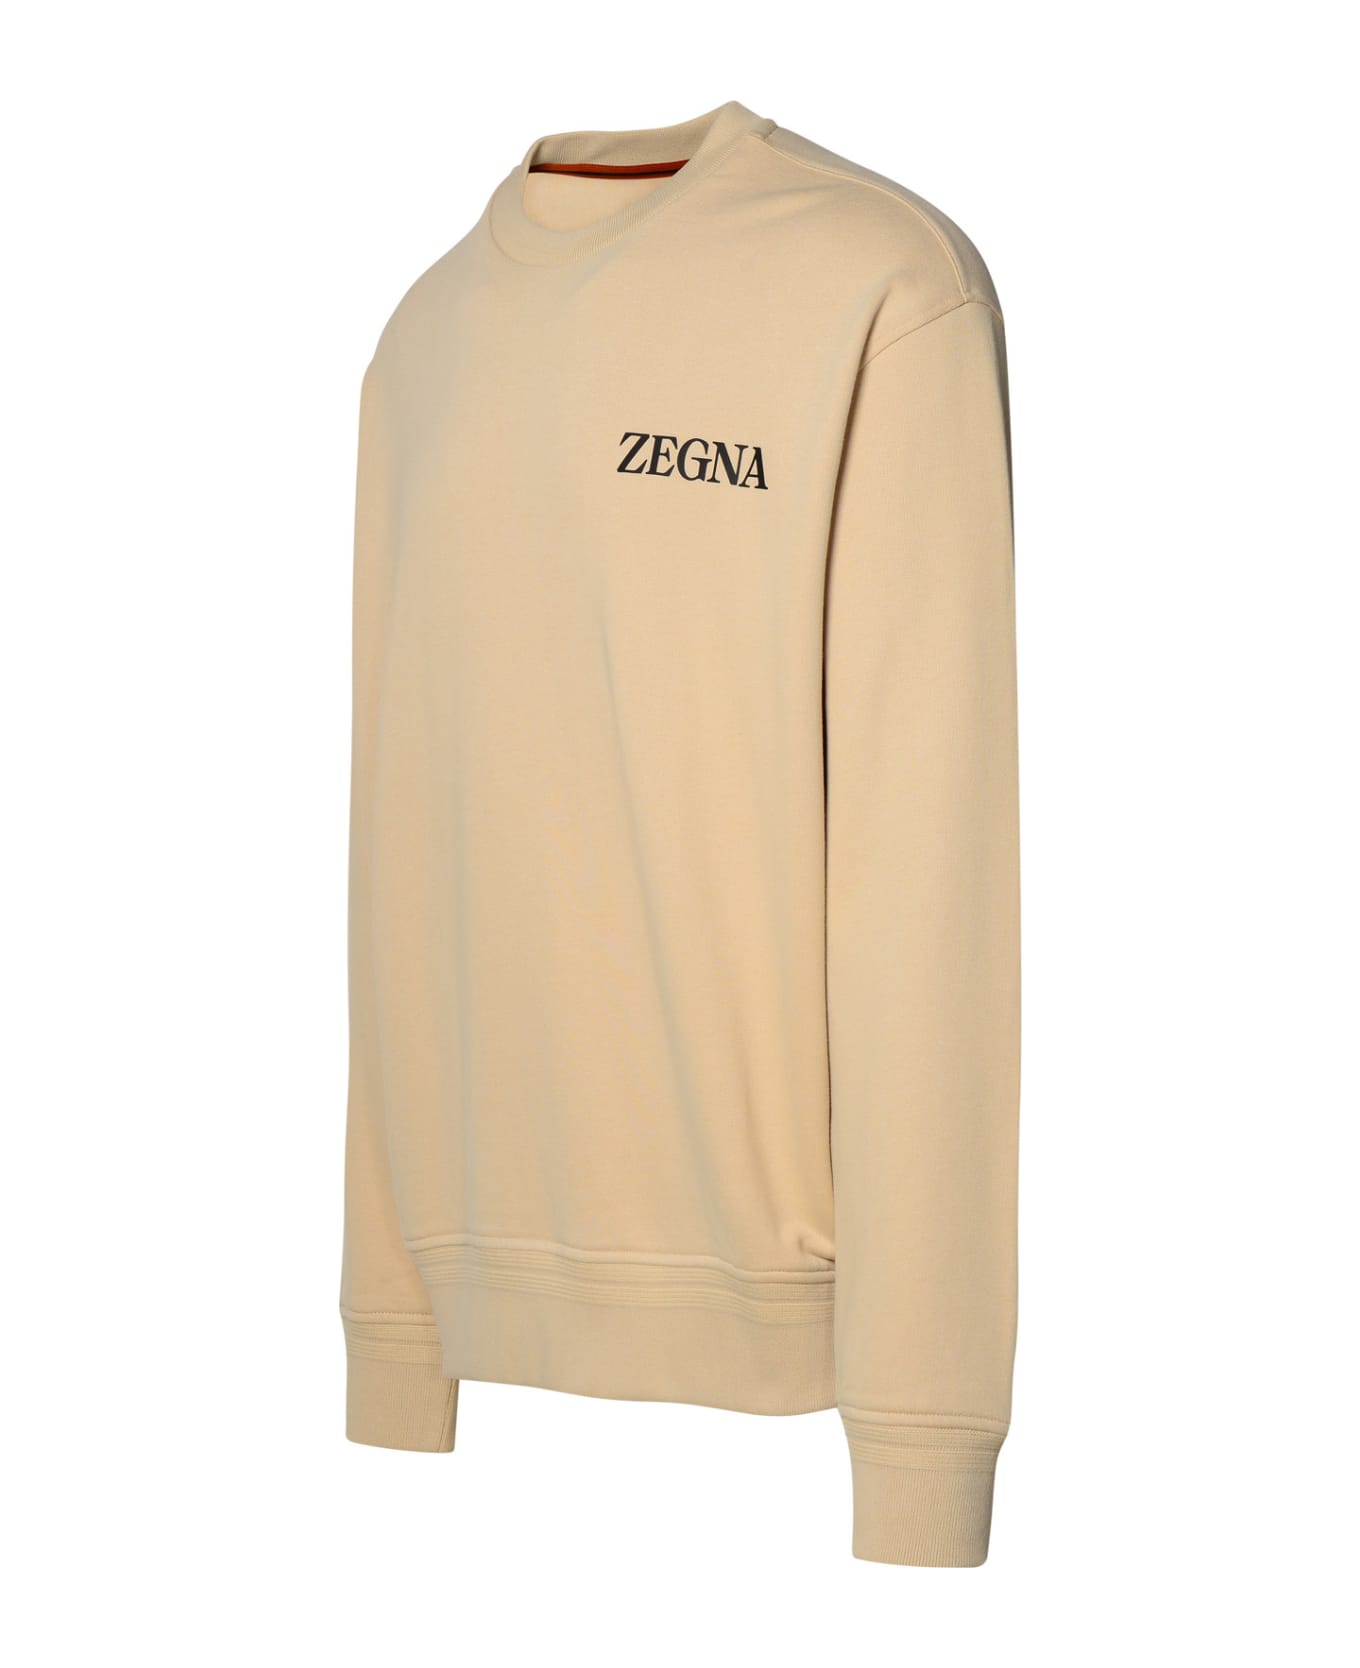 Zegna Beige Cotton Sweatshirt - Beige